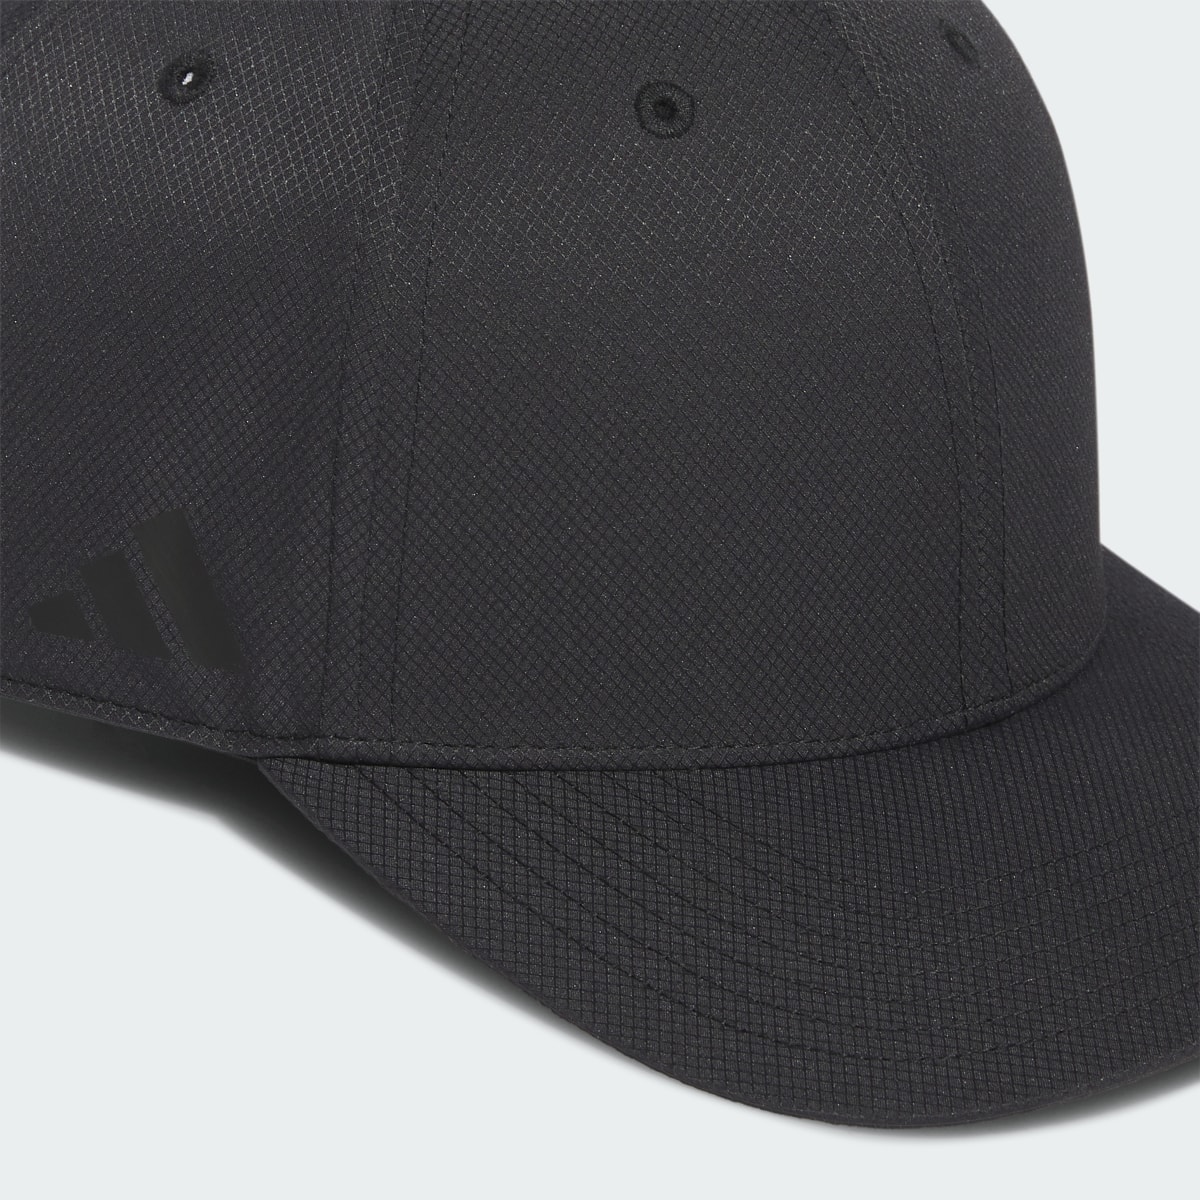 Adidas Crestable Tour Snapback Hat. 4